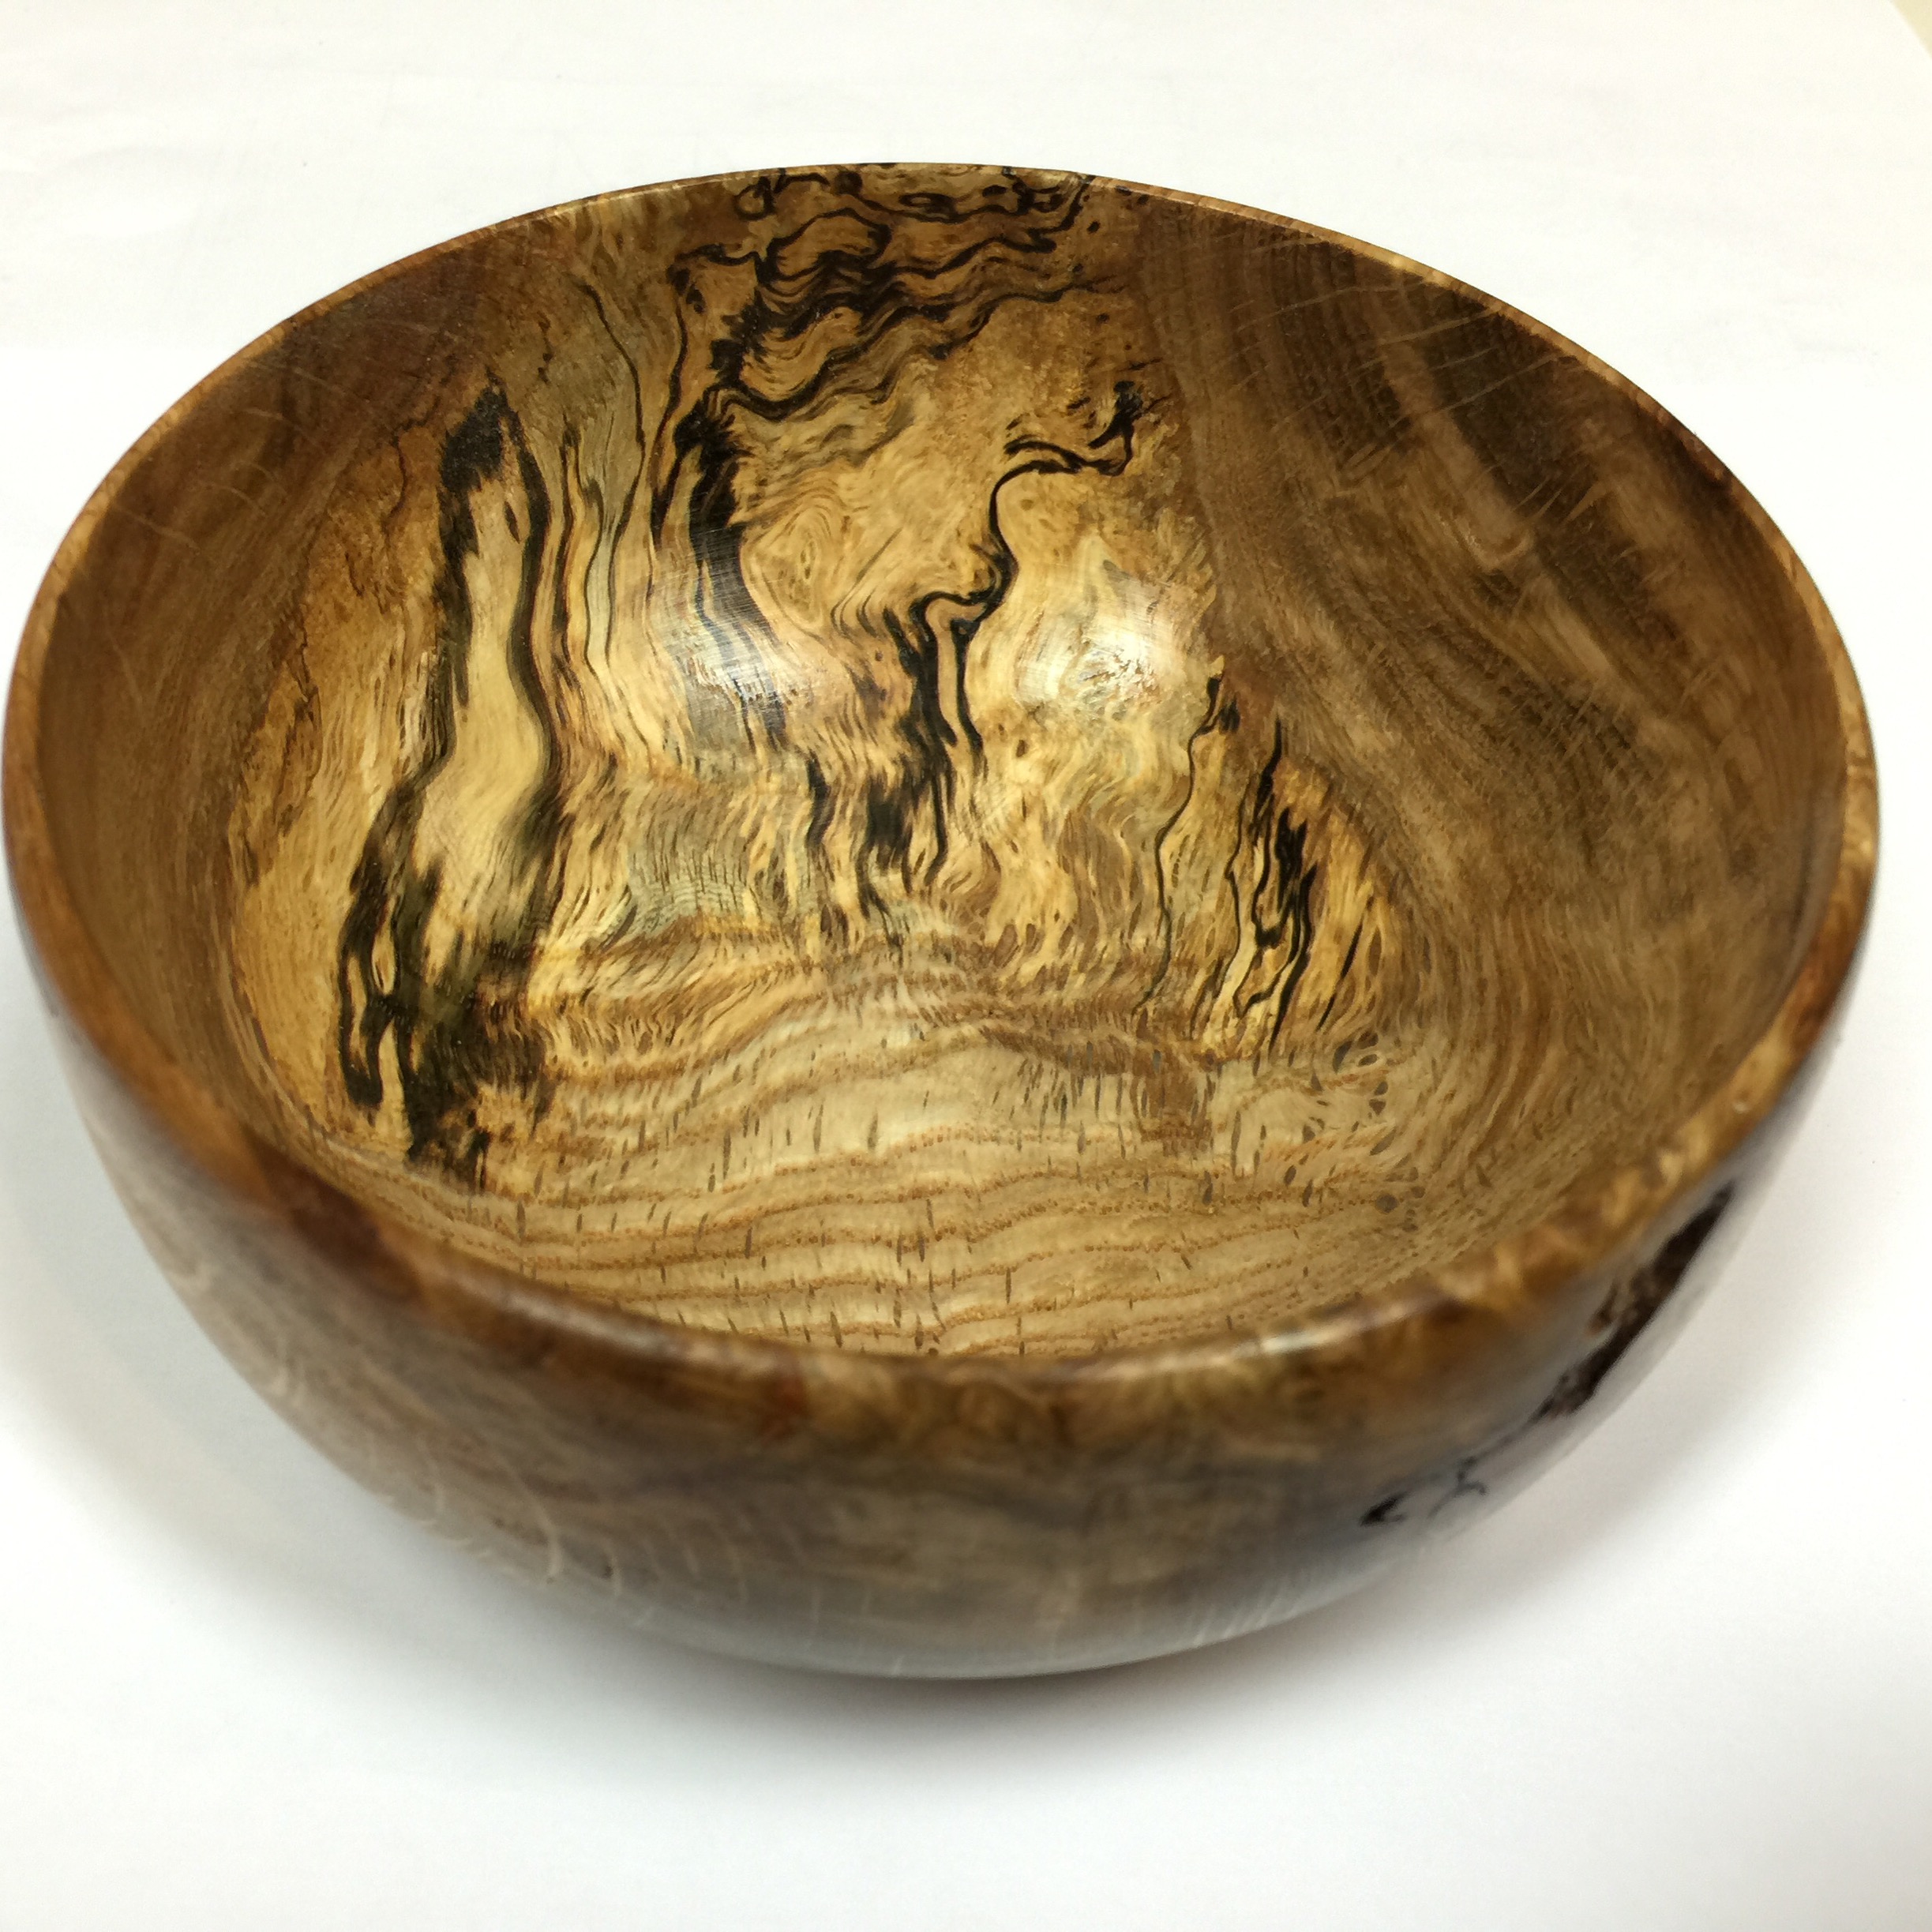 Solid Wood Bowls